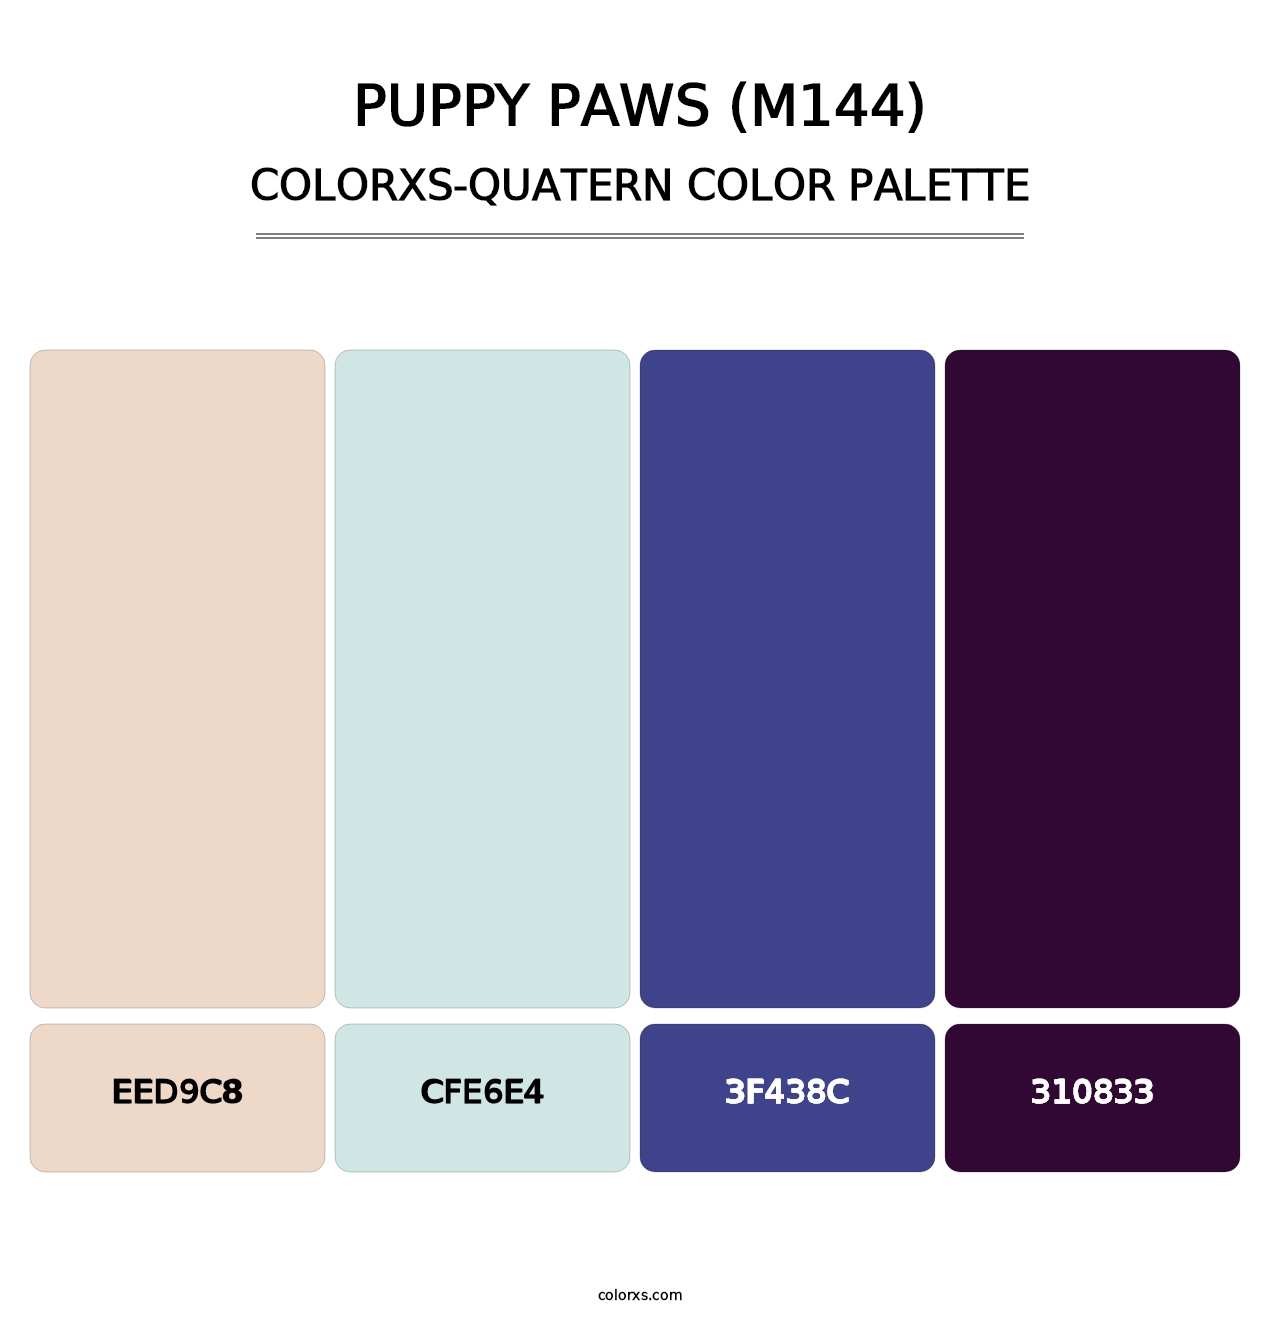 Puppy Paws (M144) - Colorxs Quatern Palette